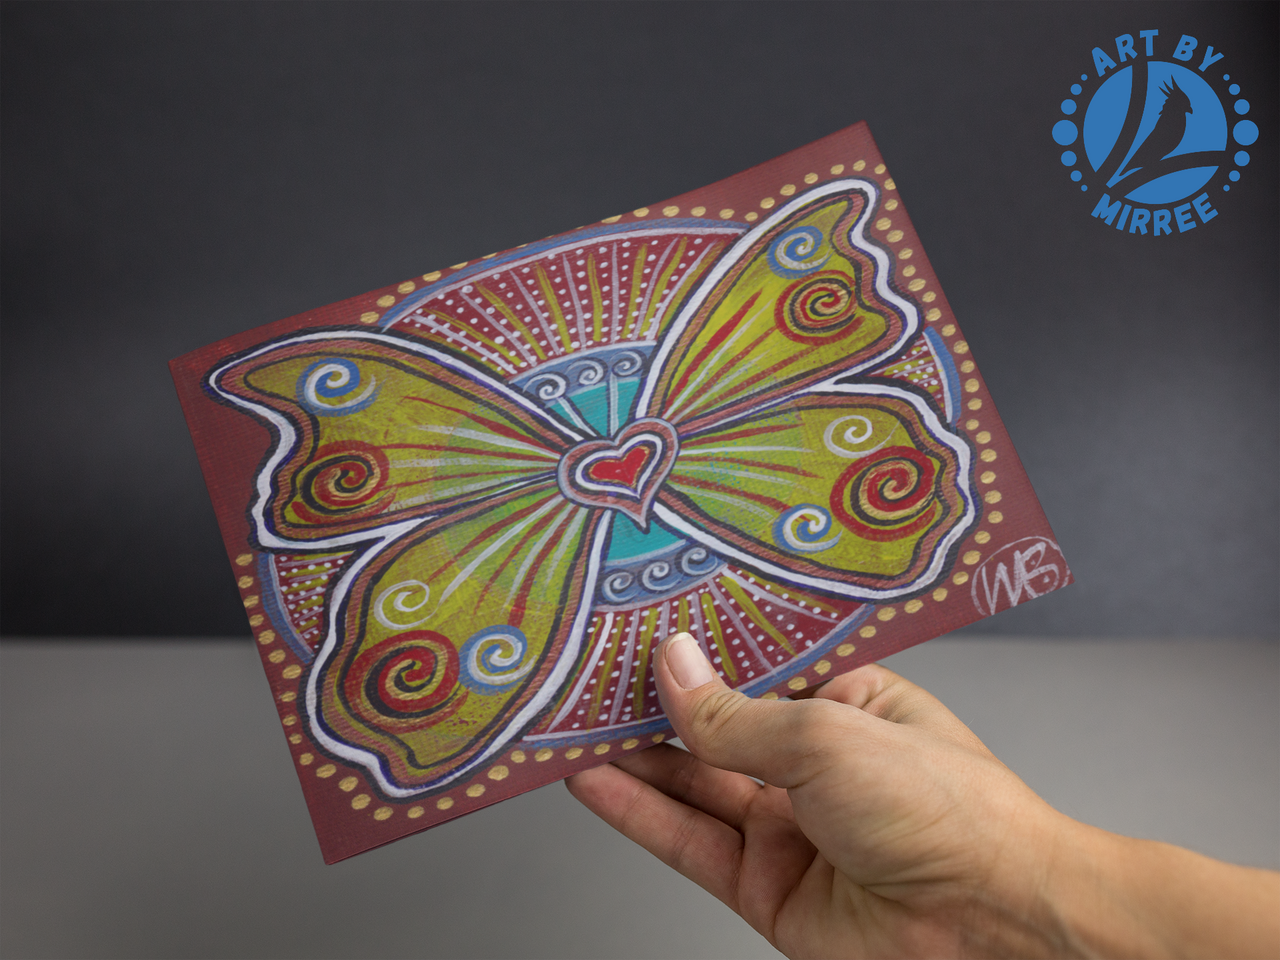 Rebirth Butterfly Aboriginal Art by Mirree A6 PostCard Single